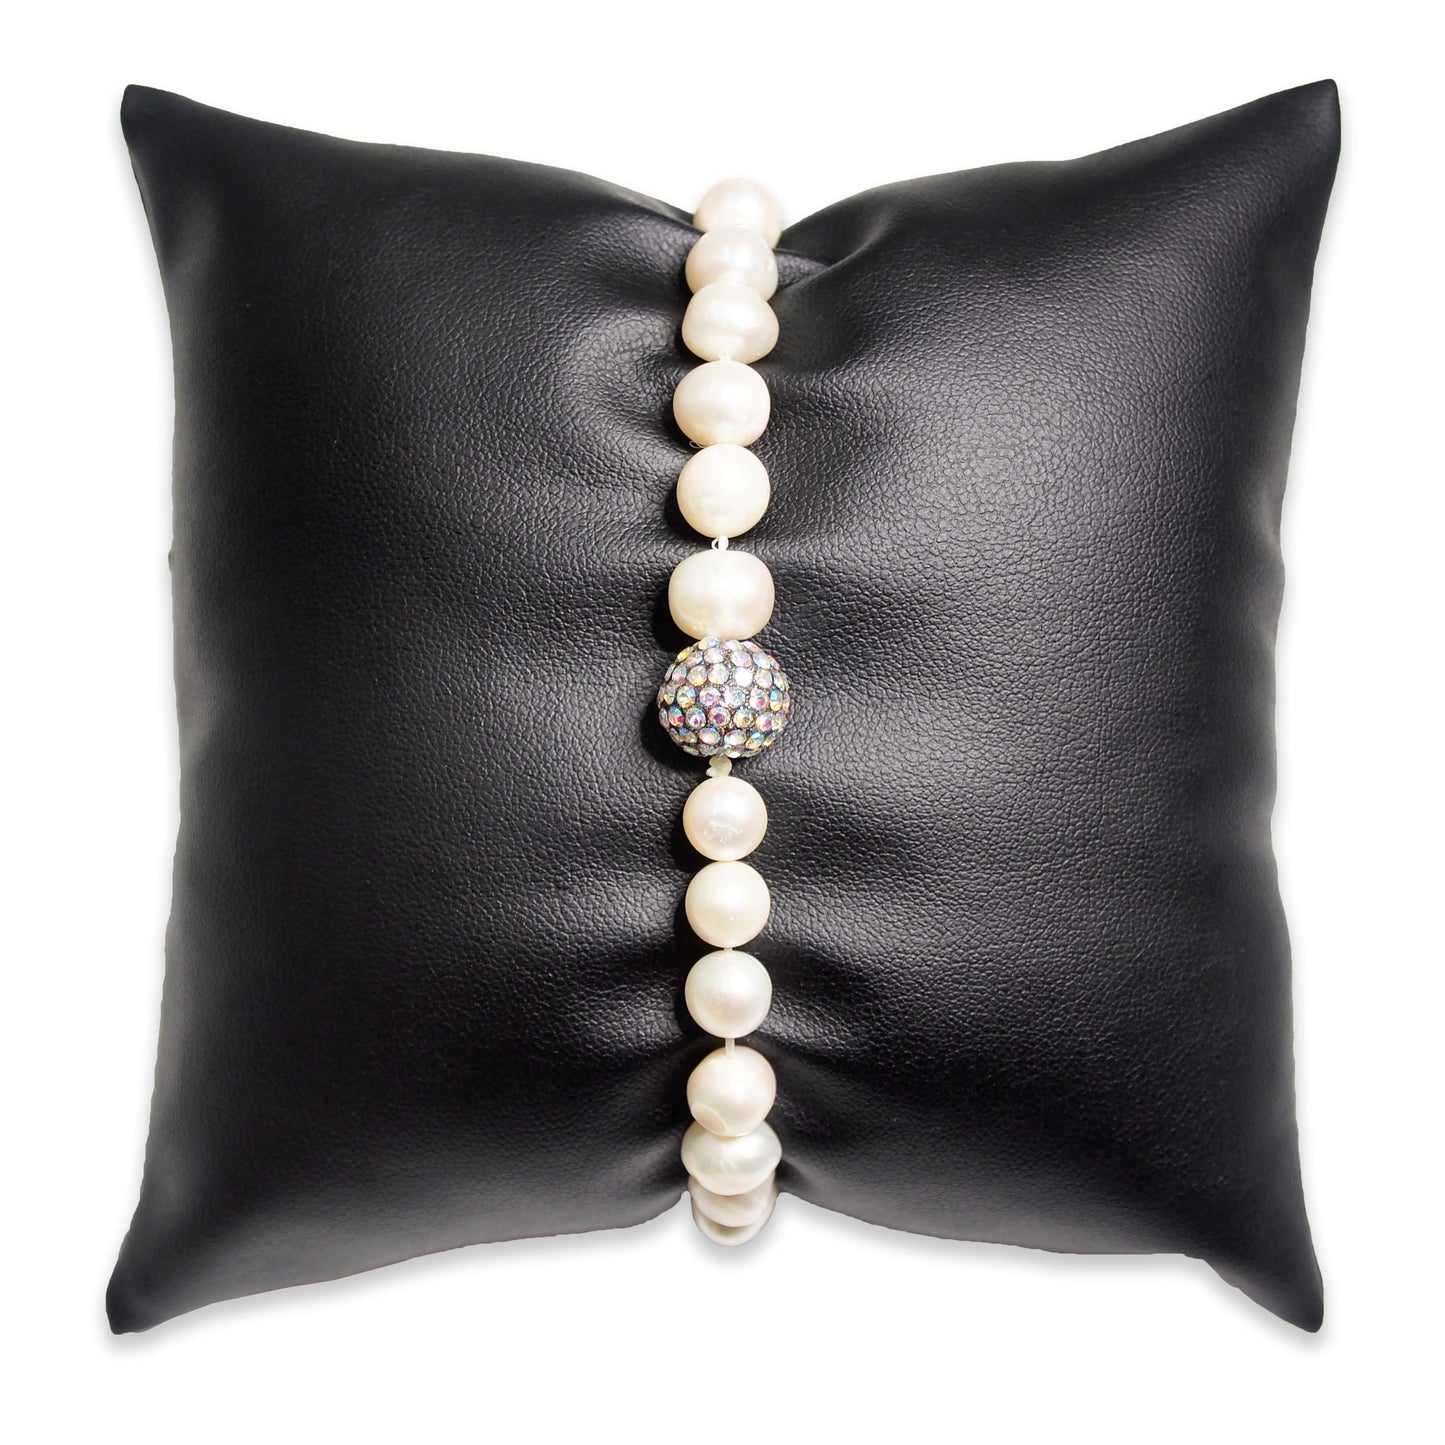 5" Black Leatherette Pillow Displays